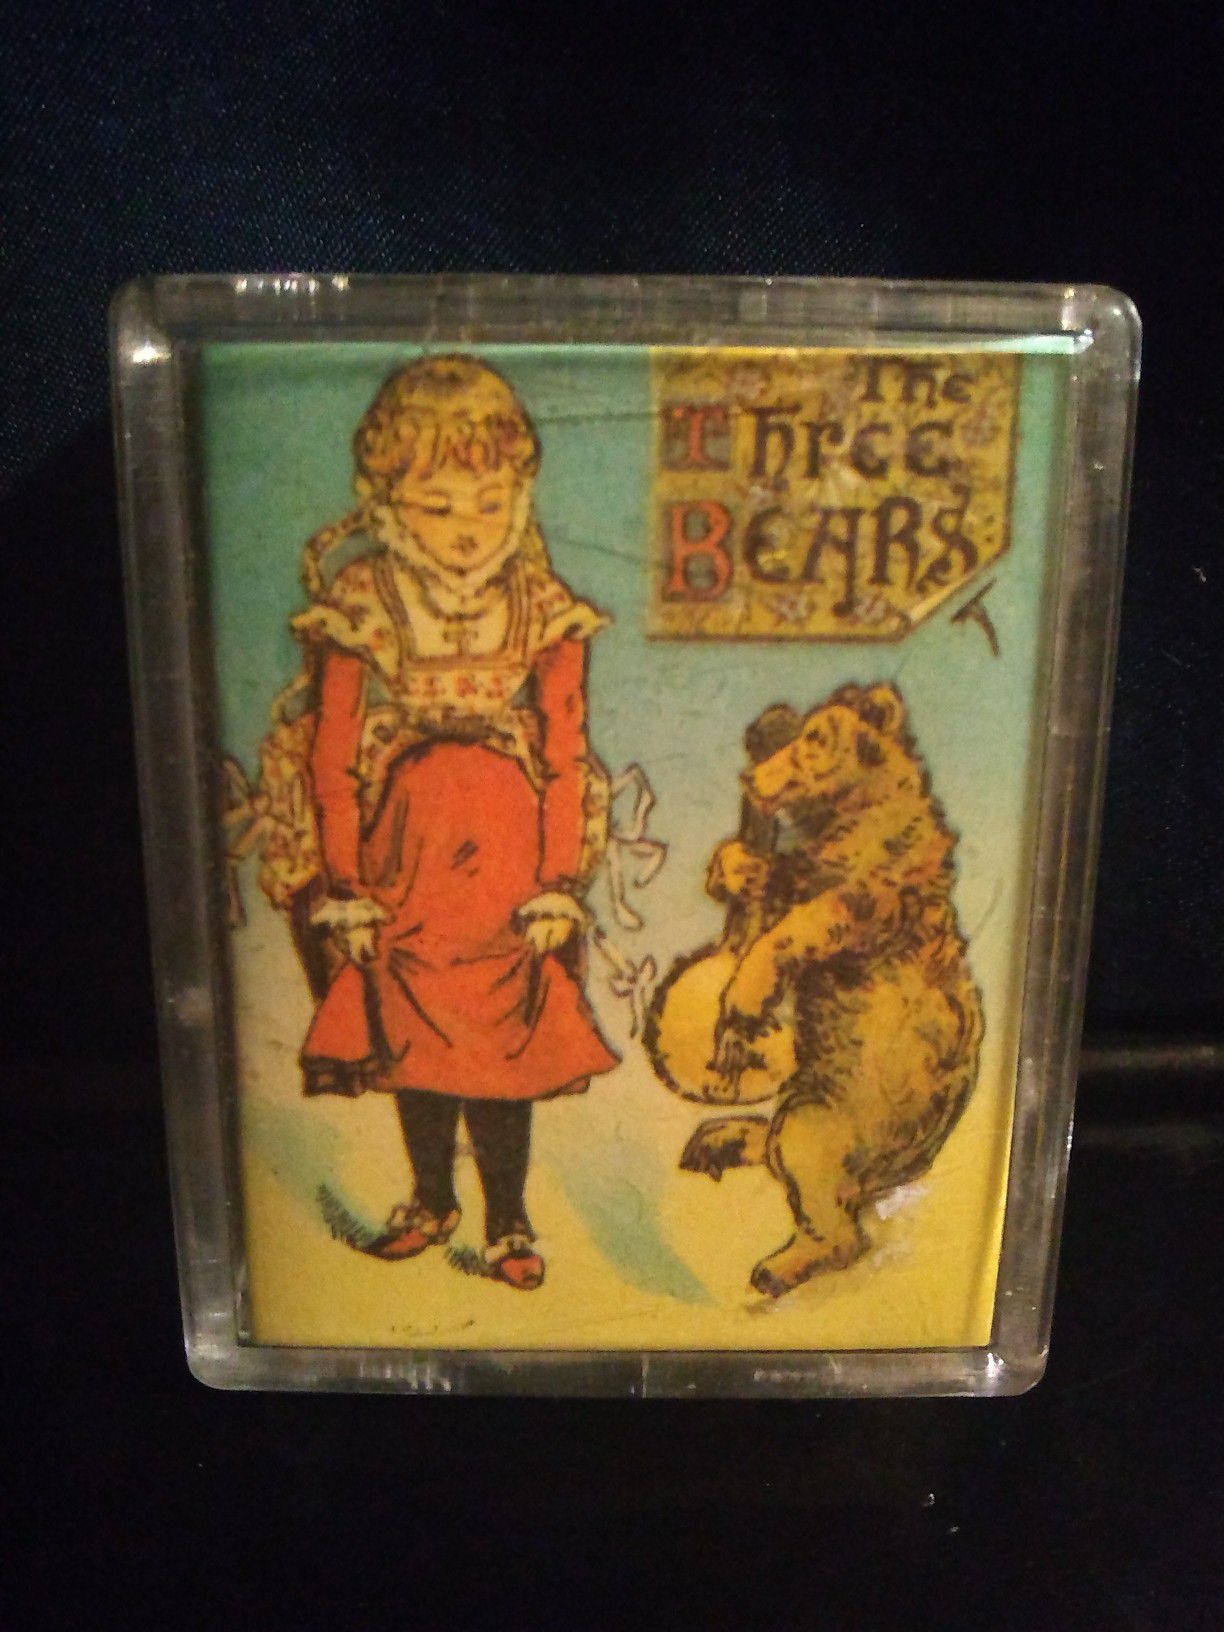 Vintage Teddy bear books 5 miniature dollhouse books